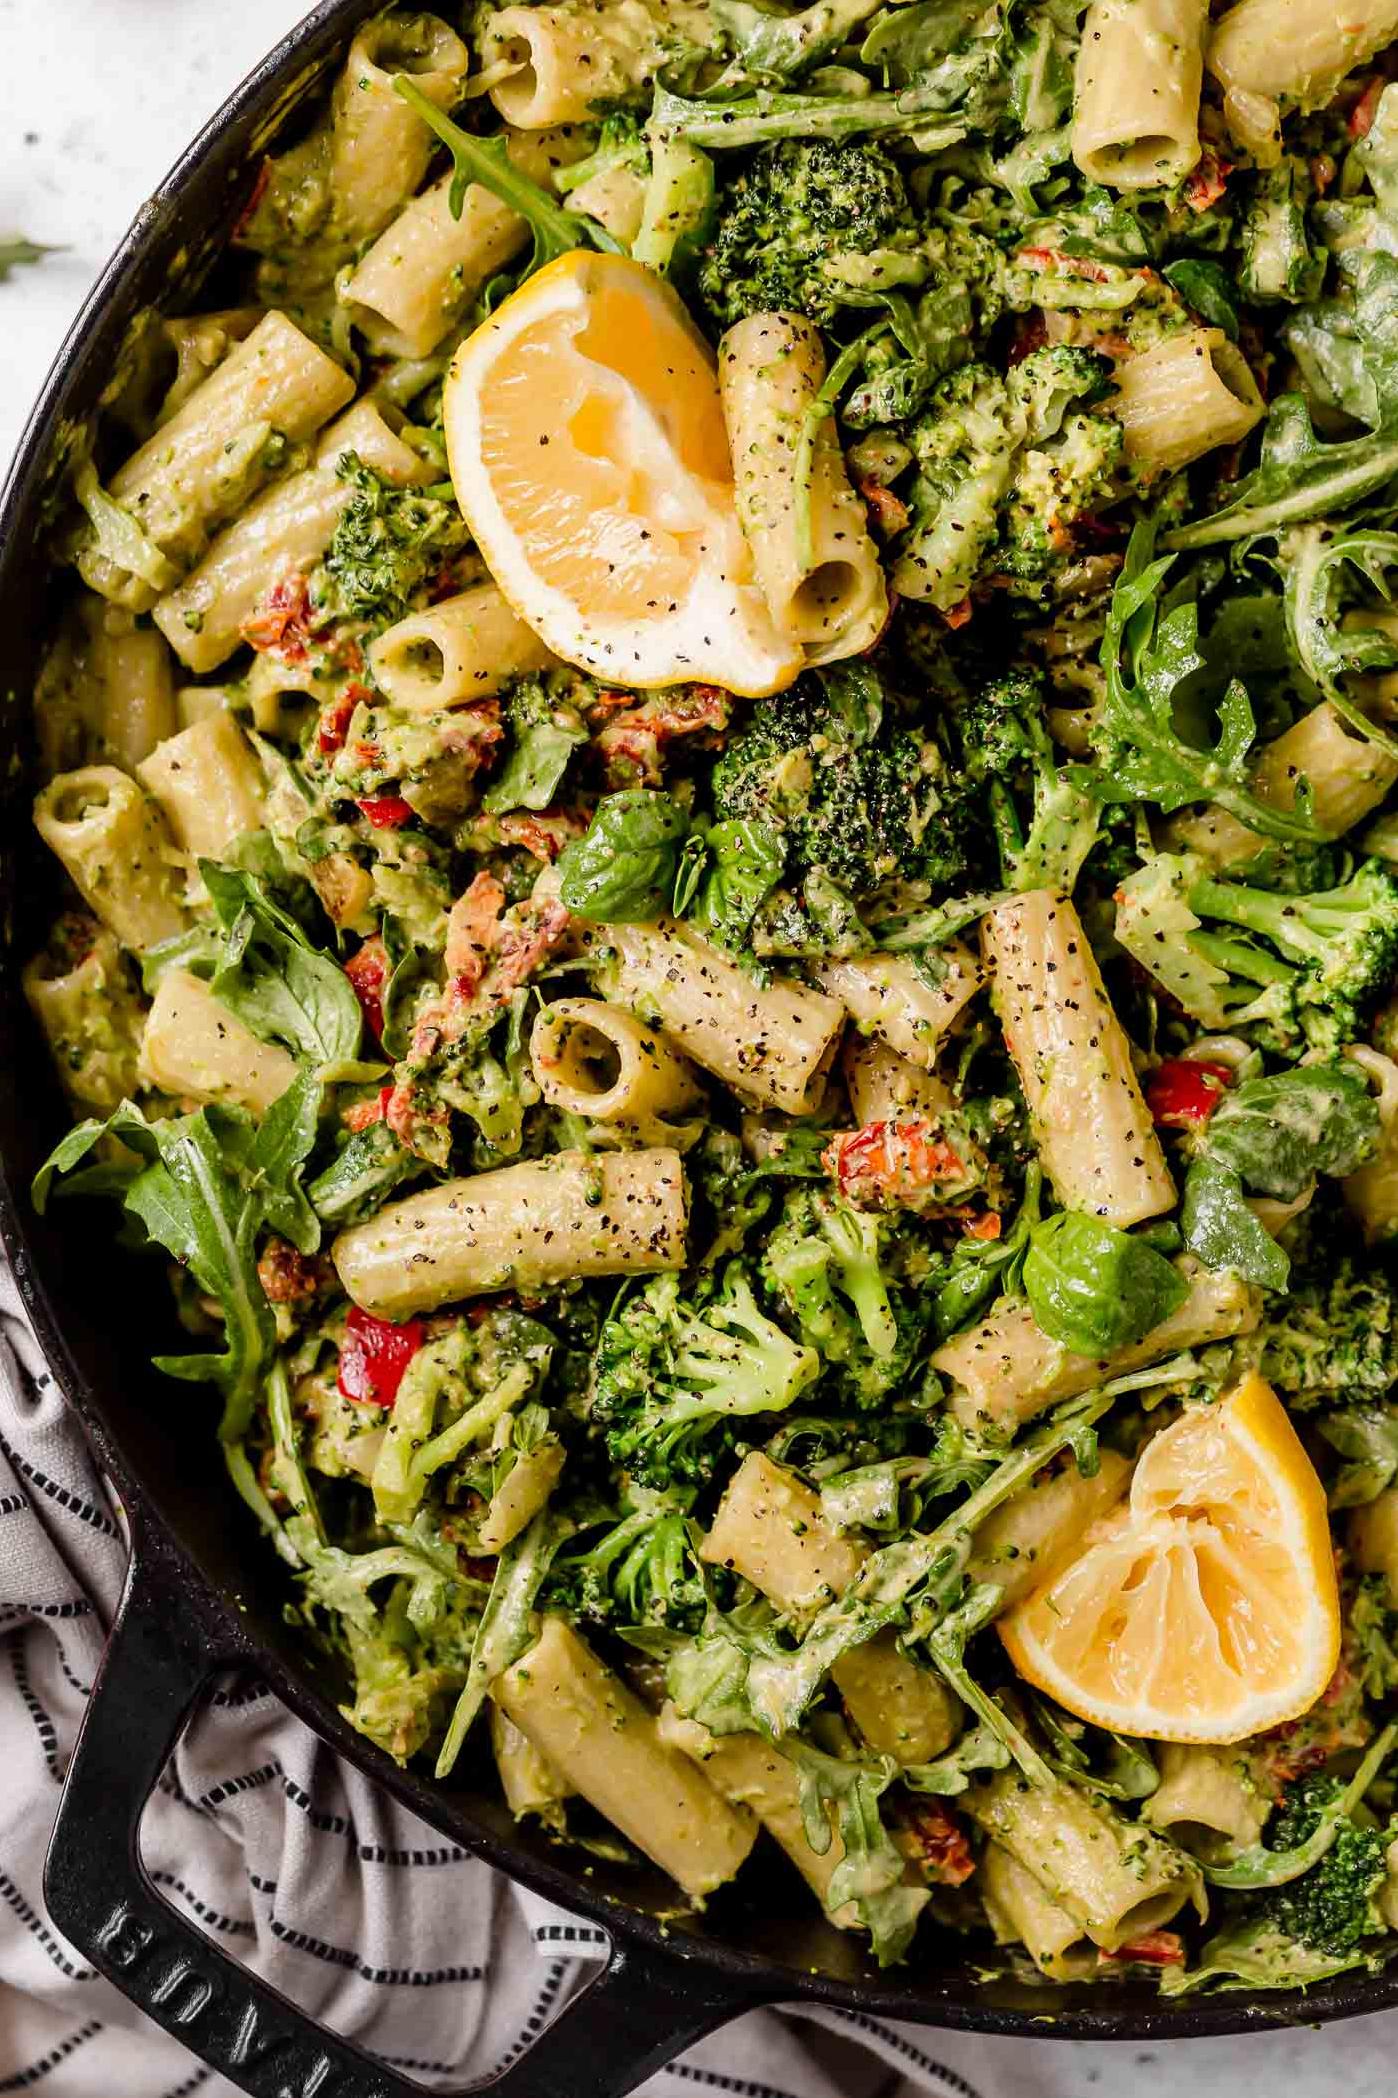  Layers of flavors create the ultimate vegan pasta dish.